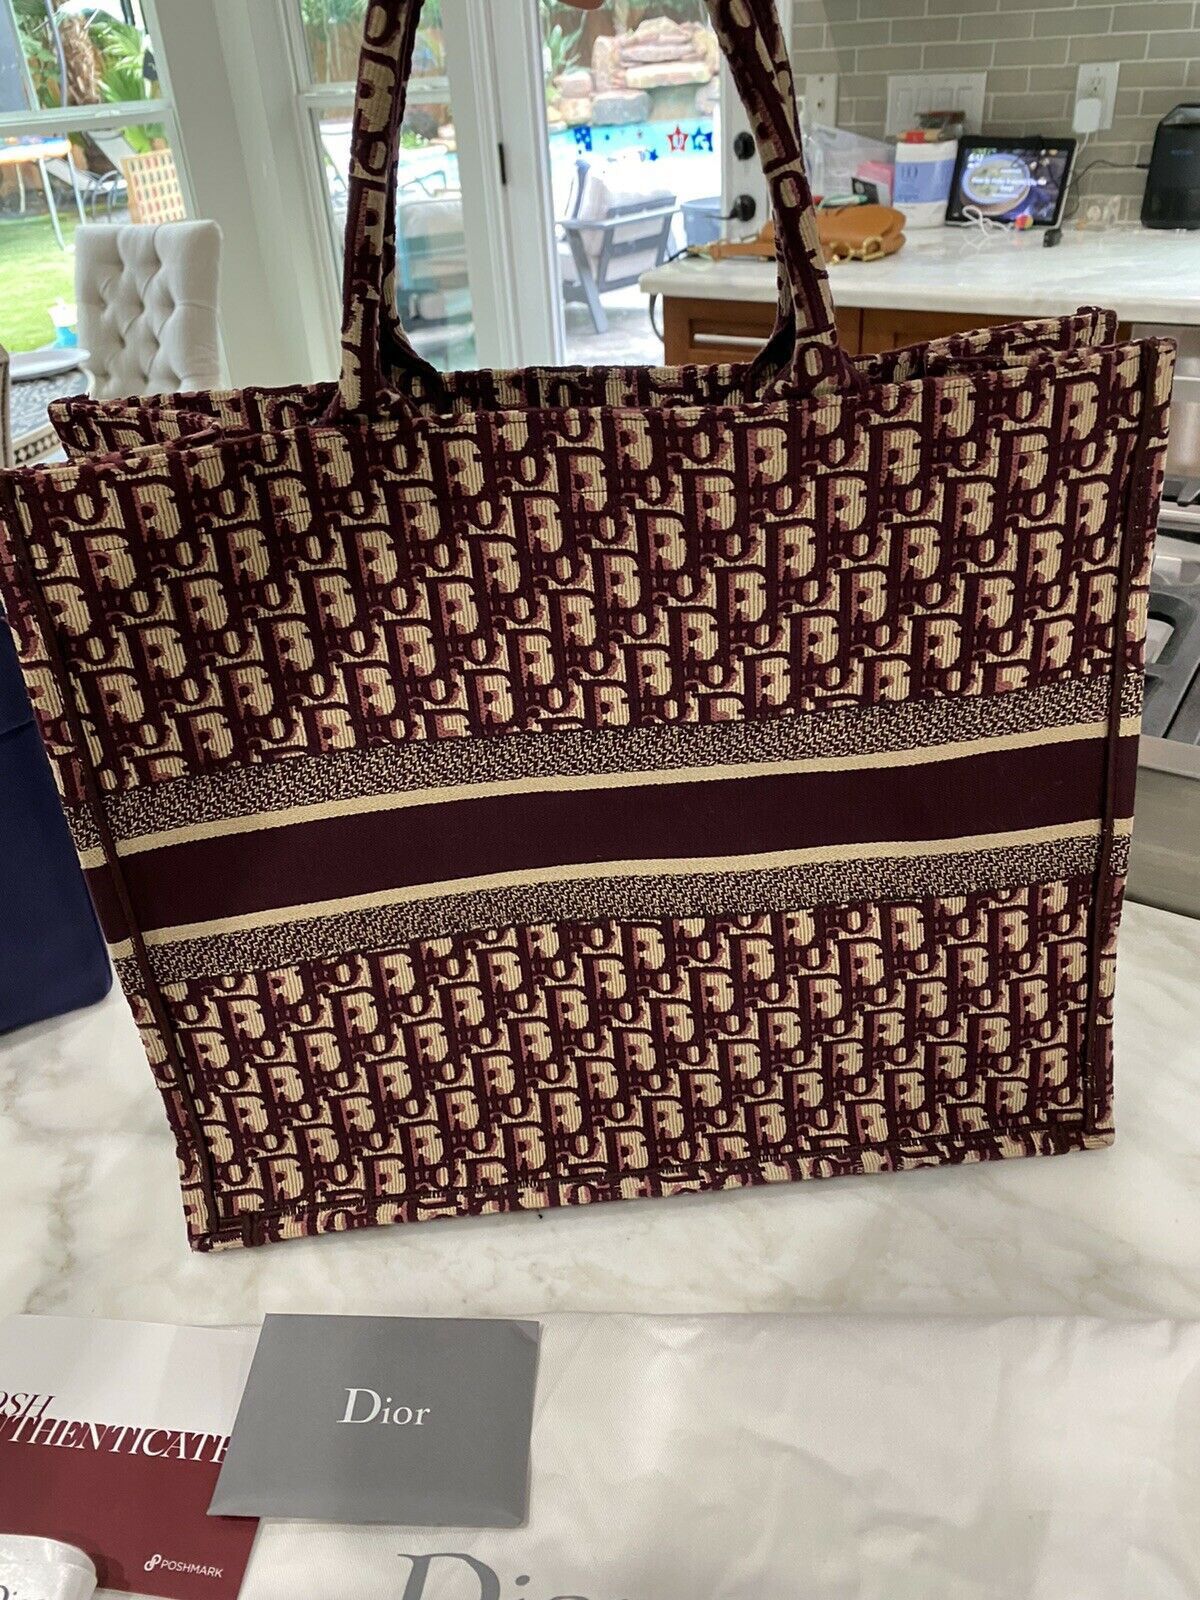 Dior Book Tote Bag Christian Dior Logo Shoppingbag Large Handbag for Sale  in Boynton Beach, FL - OfferUp